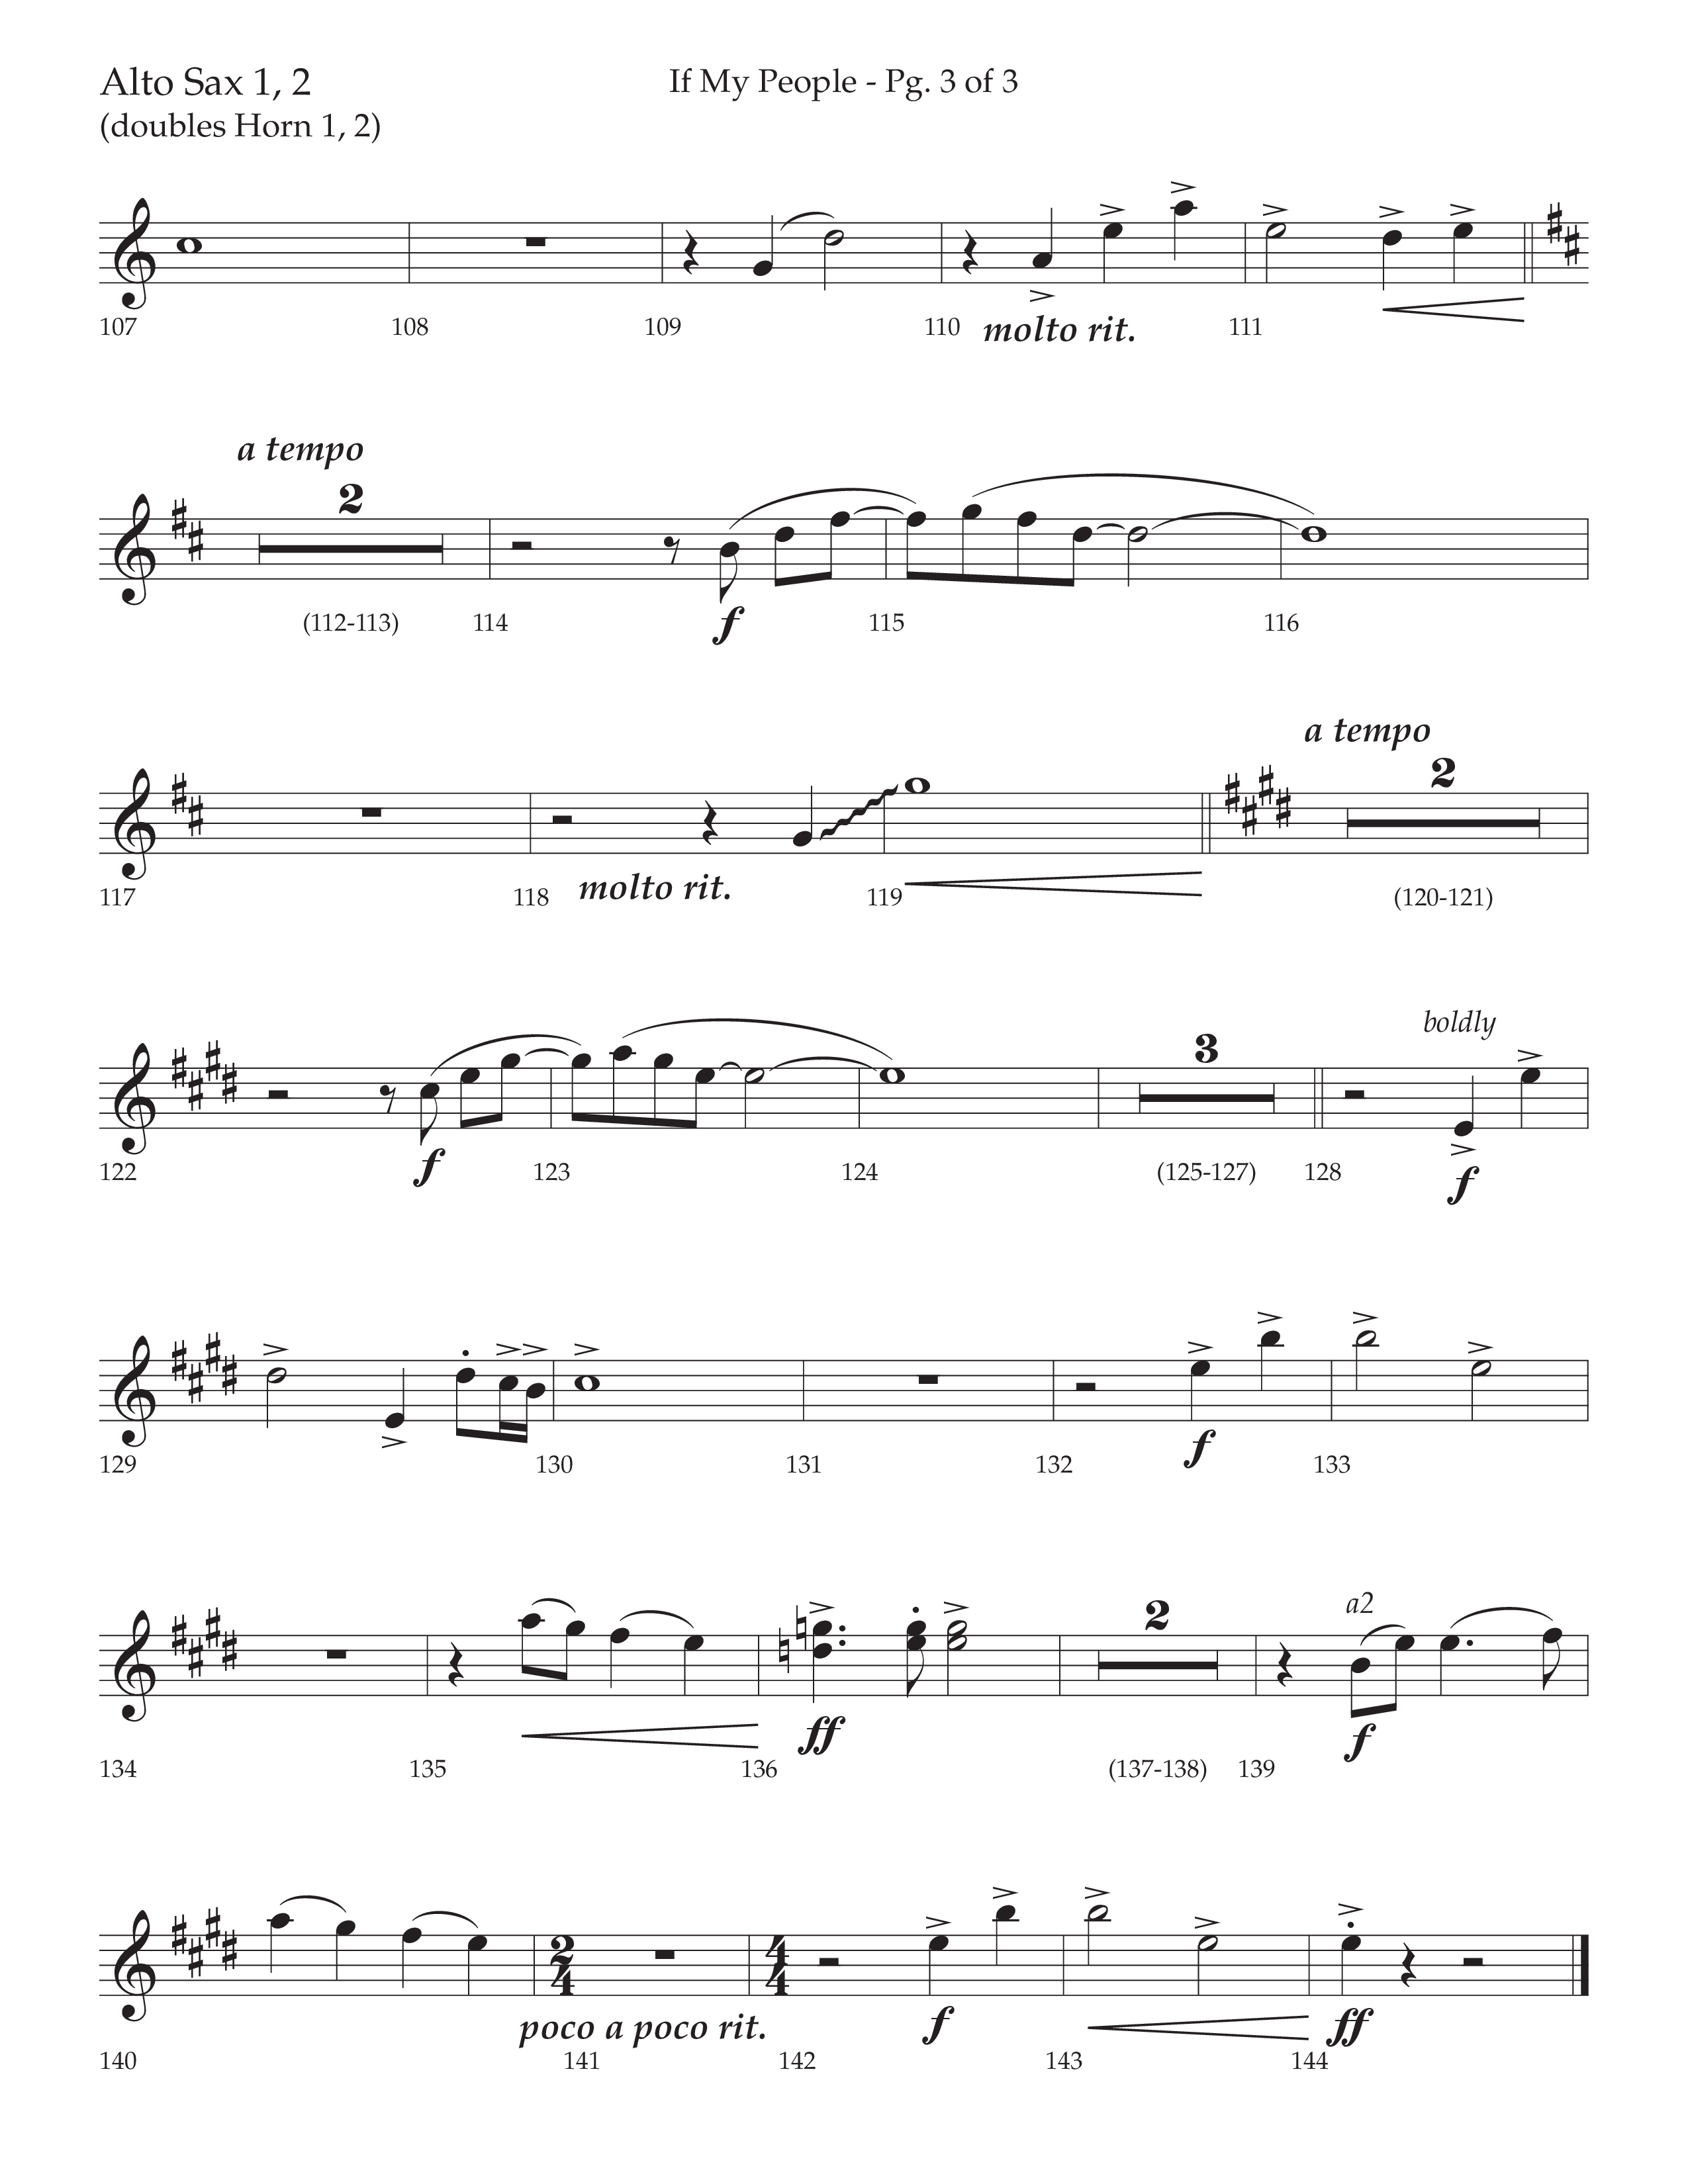 If My People (Choral Anthem SATB) Alto Sax 1/2 (Lifeway Choral / Arr. David Wise / Orch. David Shipps)